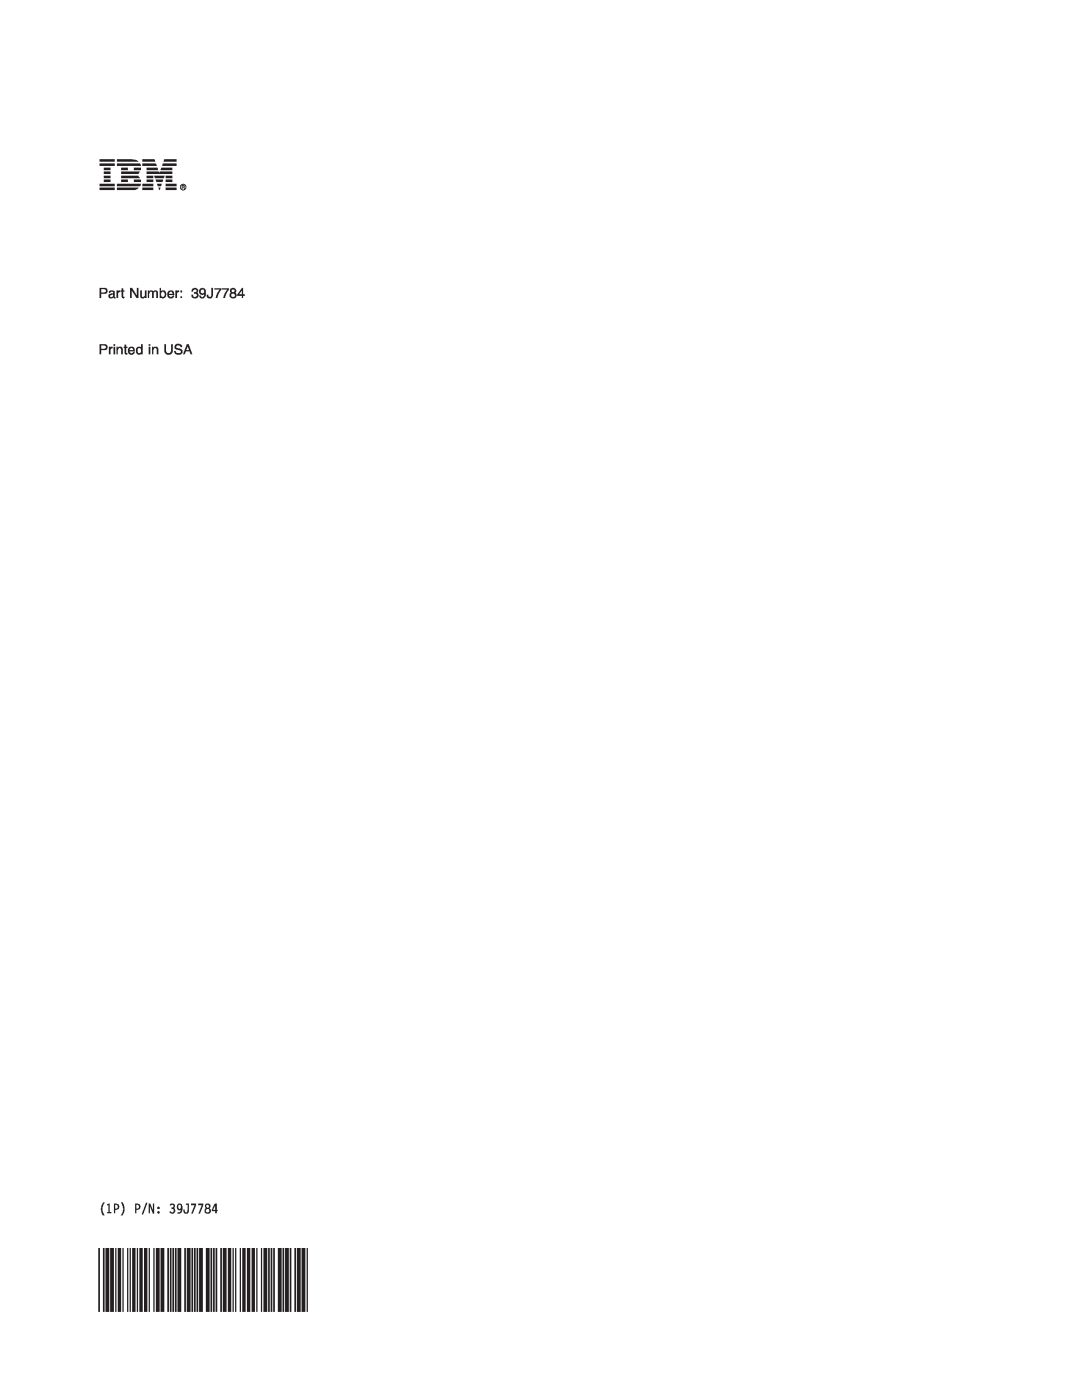 IBM 8123, 8138, 8131, 8137, 8124, 8122 manual Part Number 39J7784 Printed in USA, 1P P/N 39J7784 